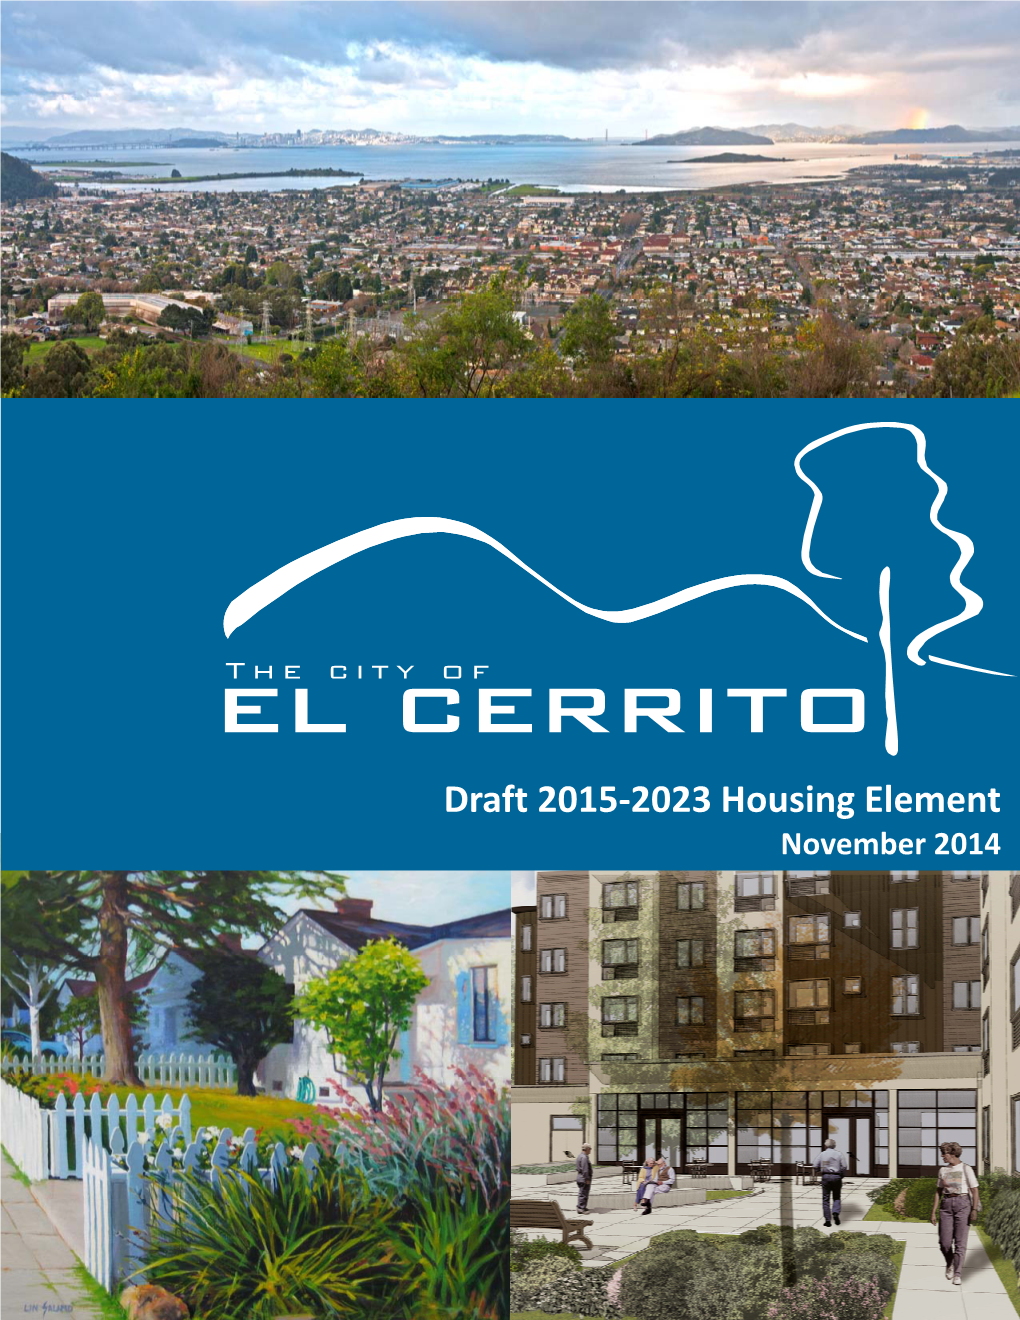 Draft 2015-2023 Housing Element